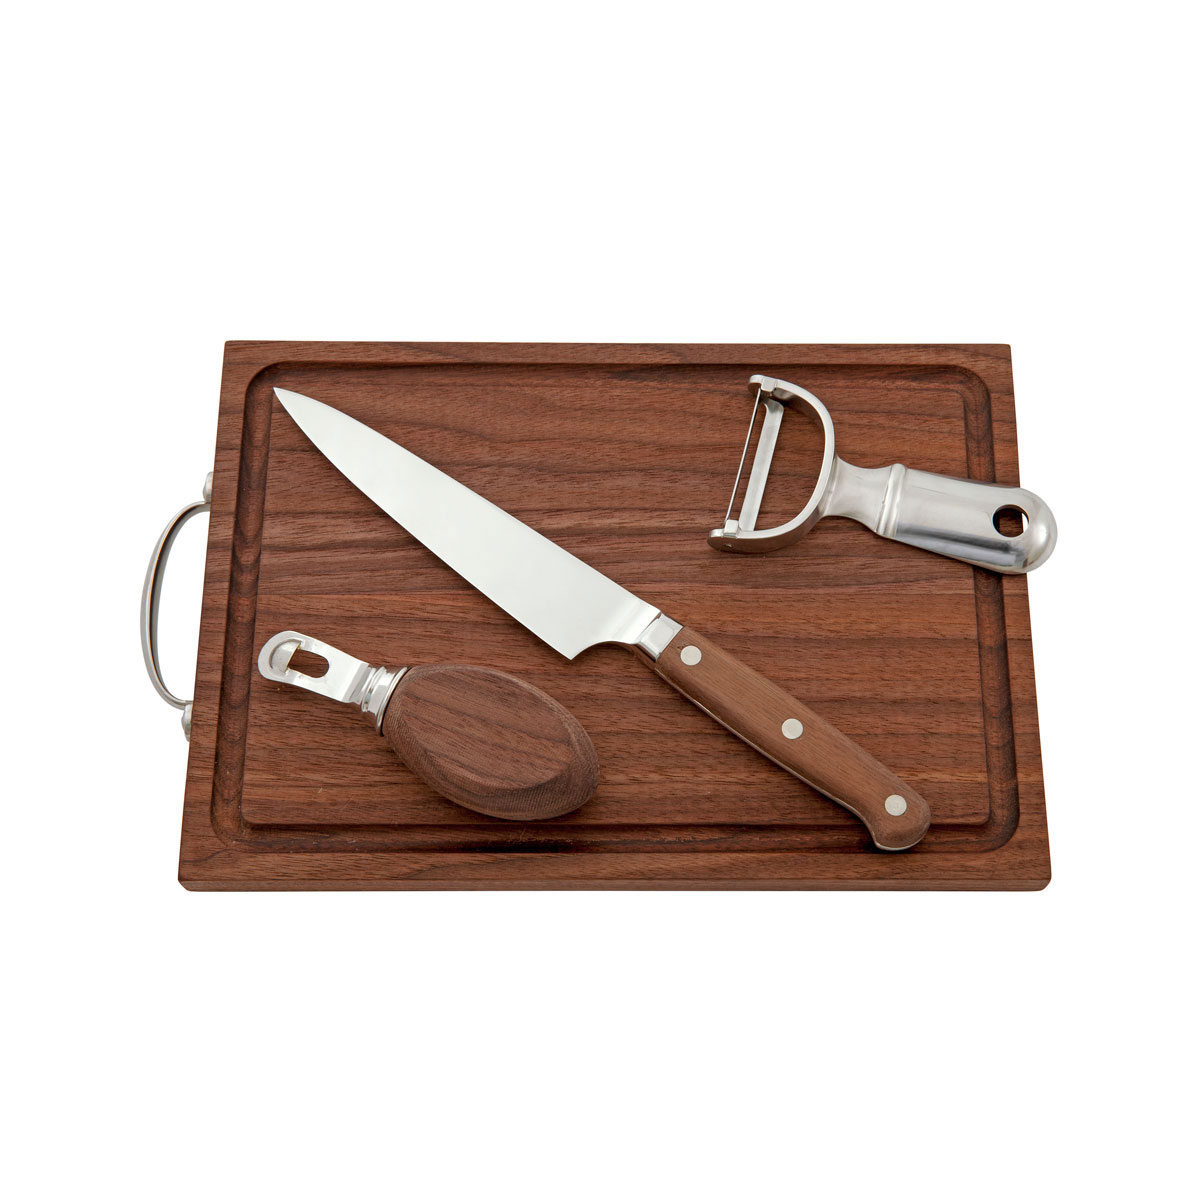 Crafthouse by Fortessa Professional Barware Tool Set (Bar Knife, Bar Board, Peeler, Channel Knife)